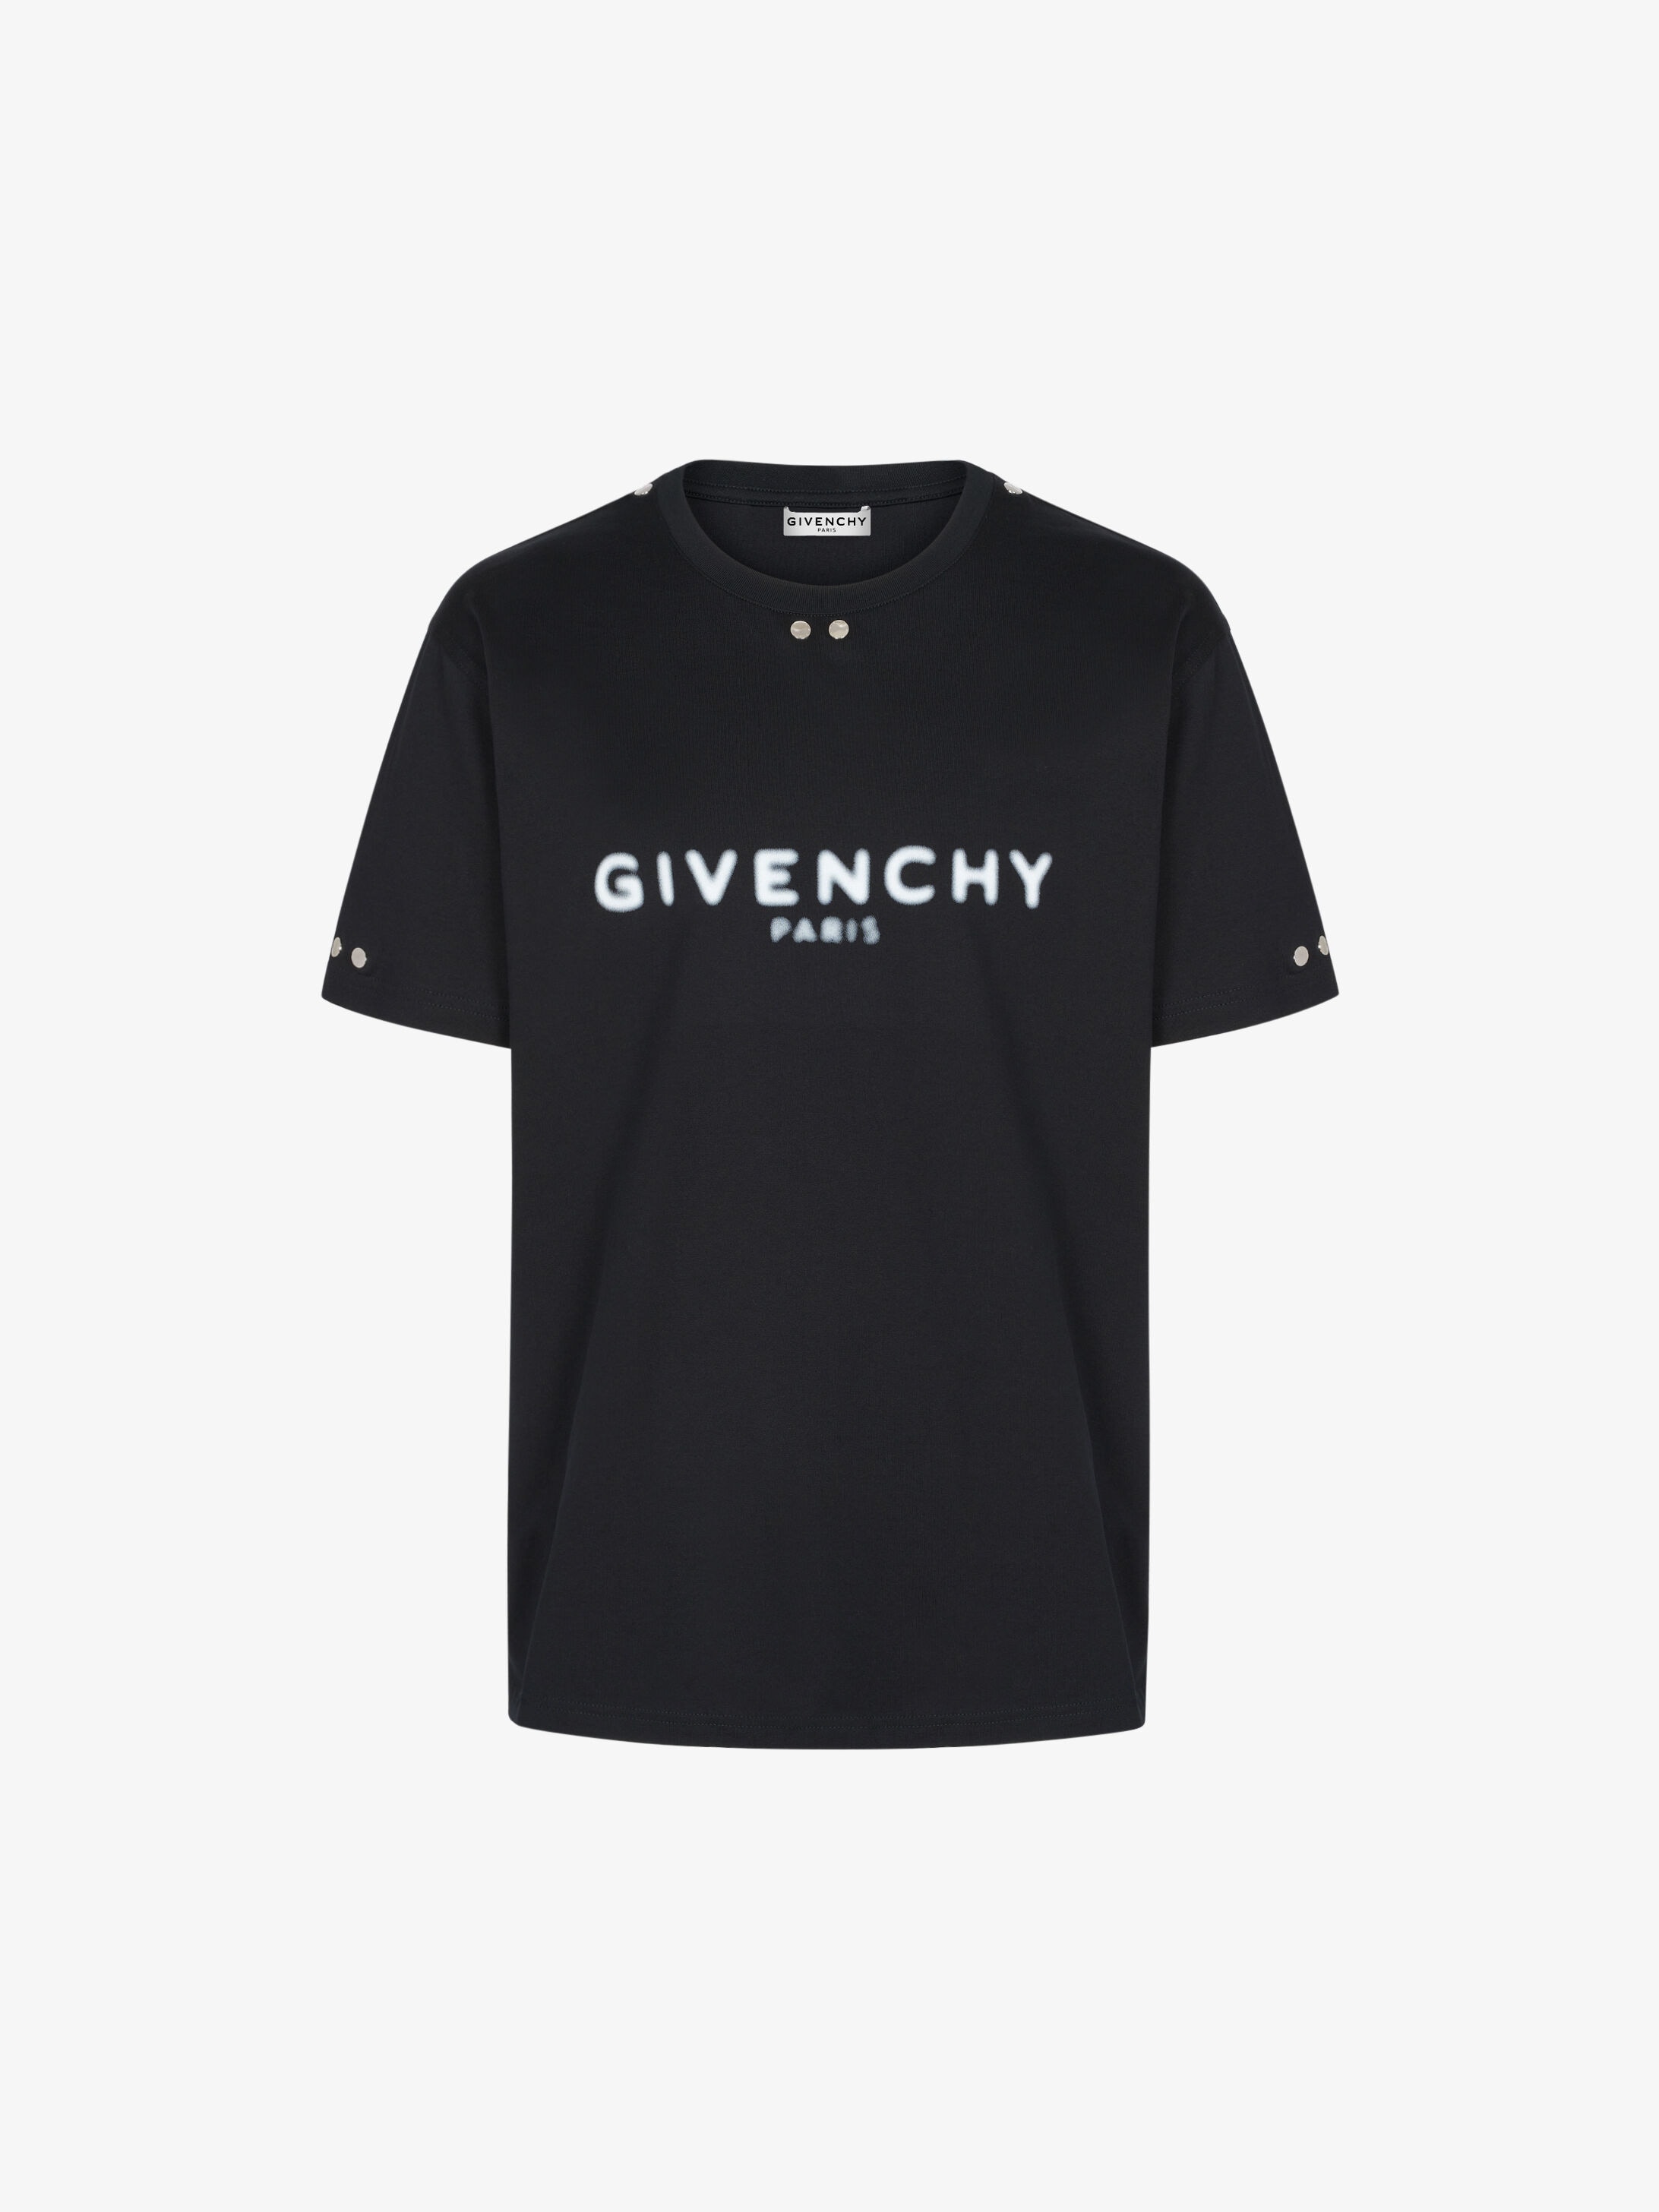 givenchy shirts price india